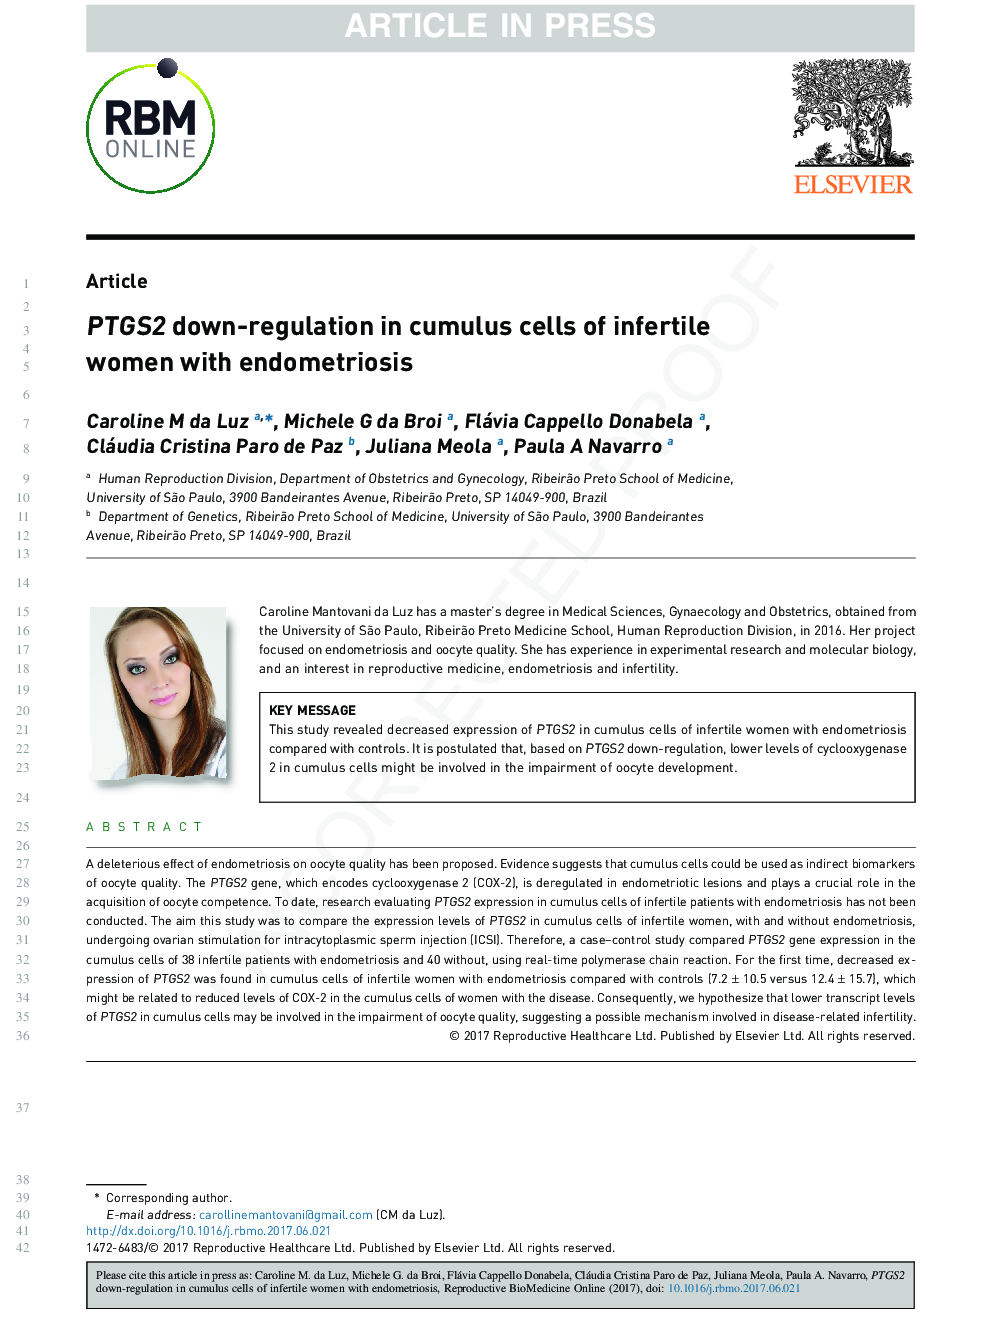 PTGS2 down-regulation in cumulus cells of infertile women with endometriosis